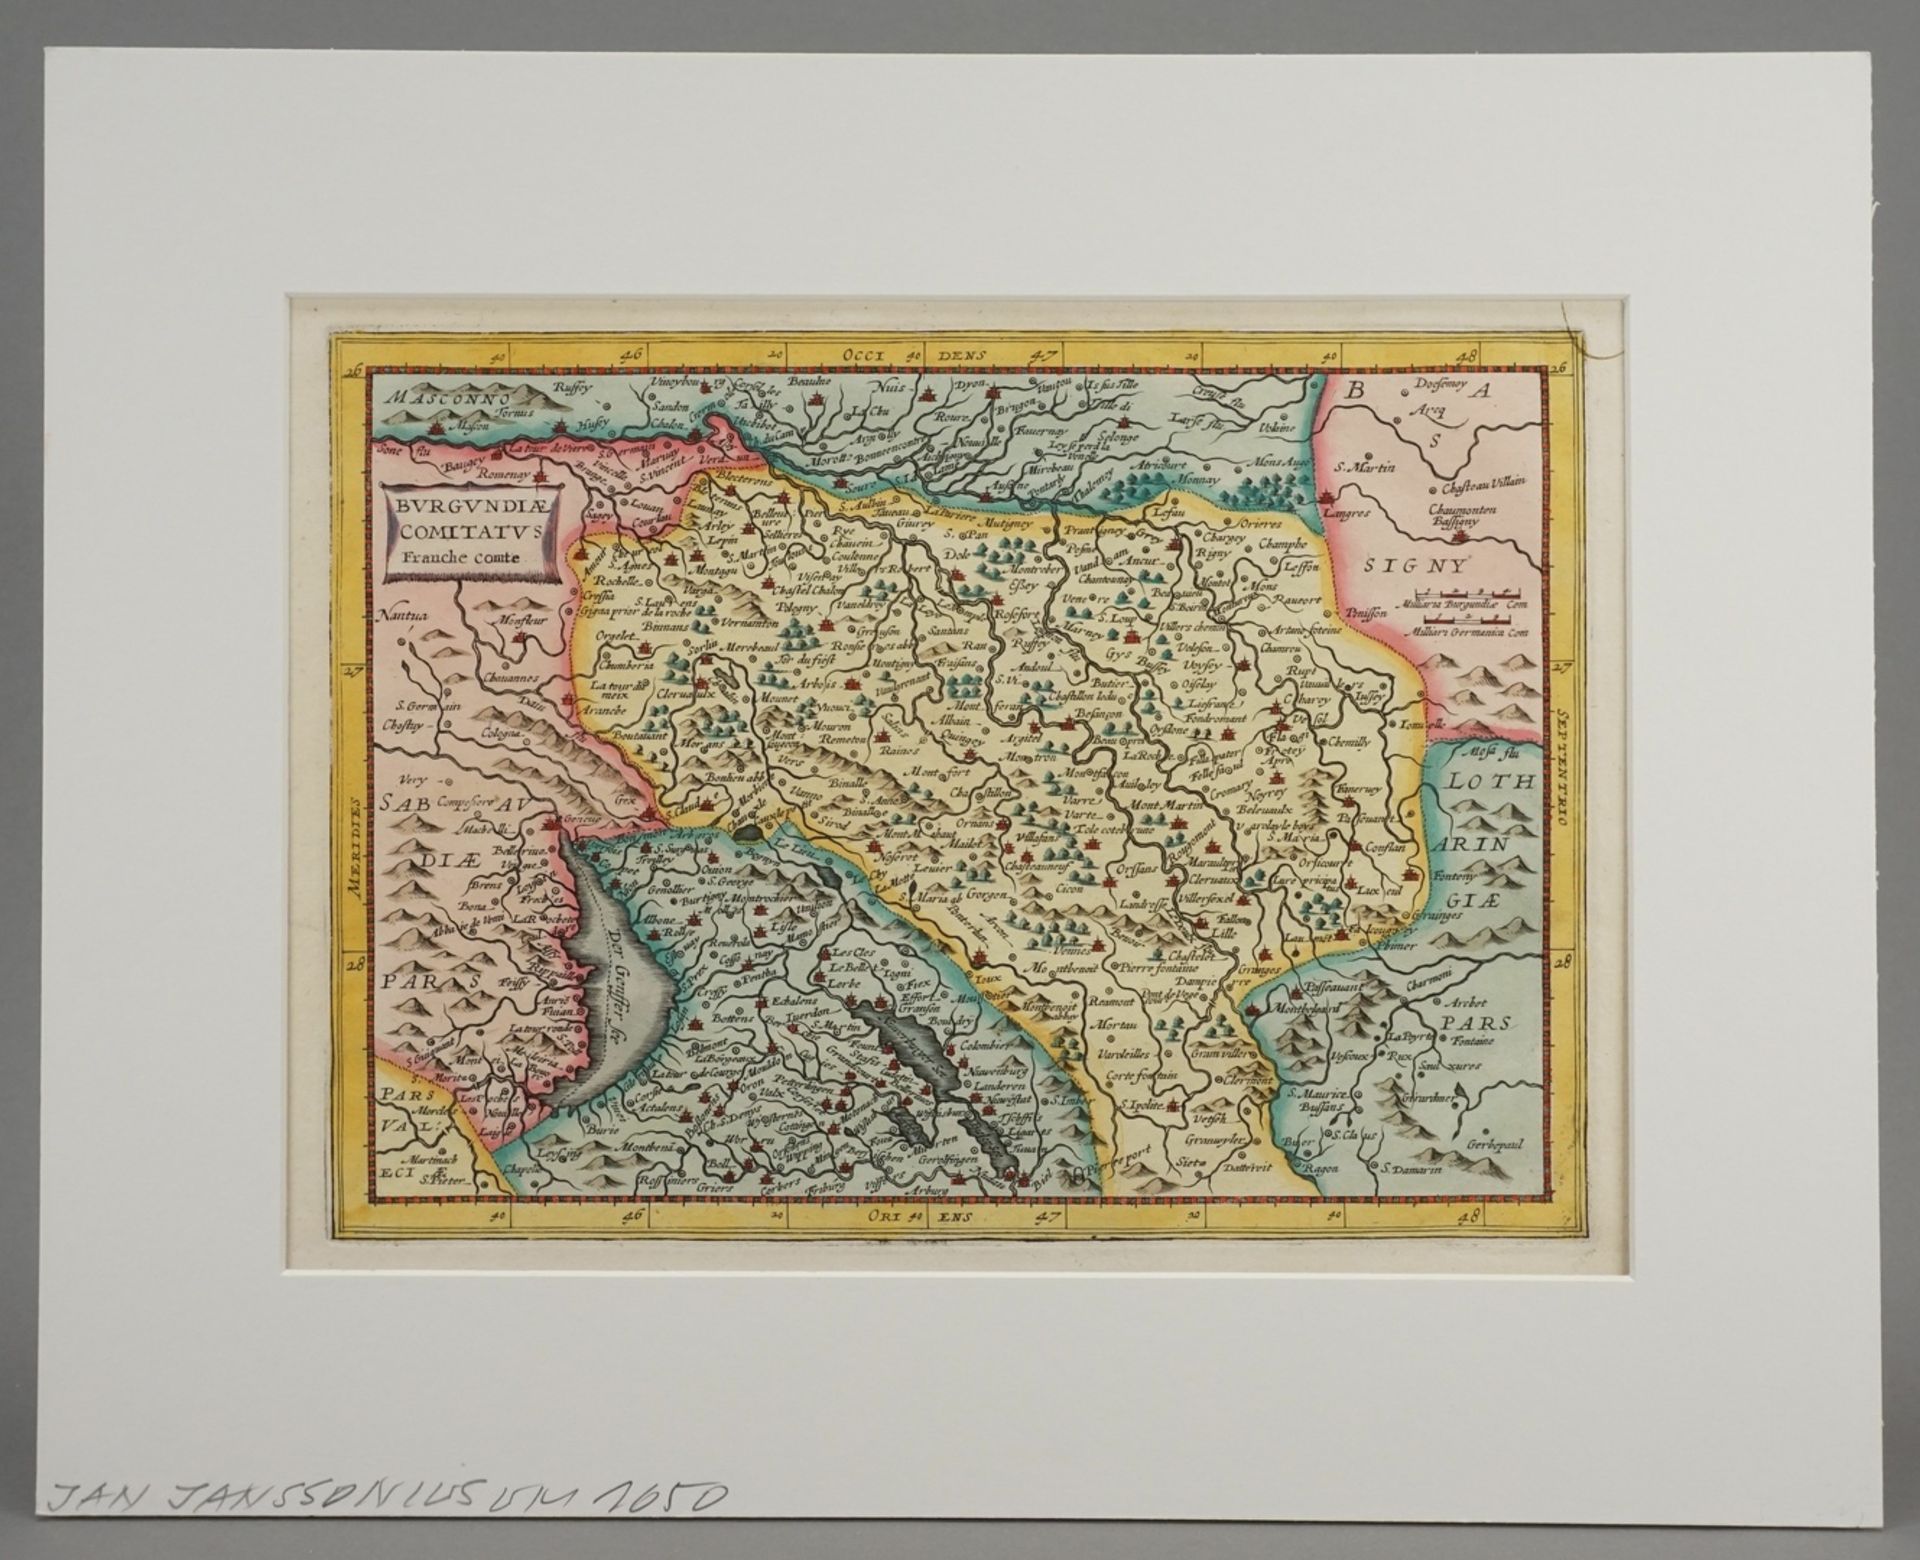 Gerhard Mercator, "Burgundiae Comitatus. Franche comte" (Landkarte Burgund) - Bild 2 aus 3